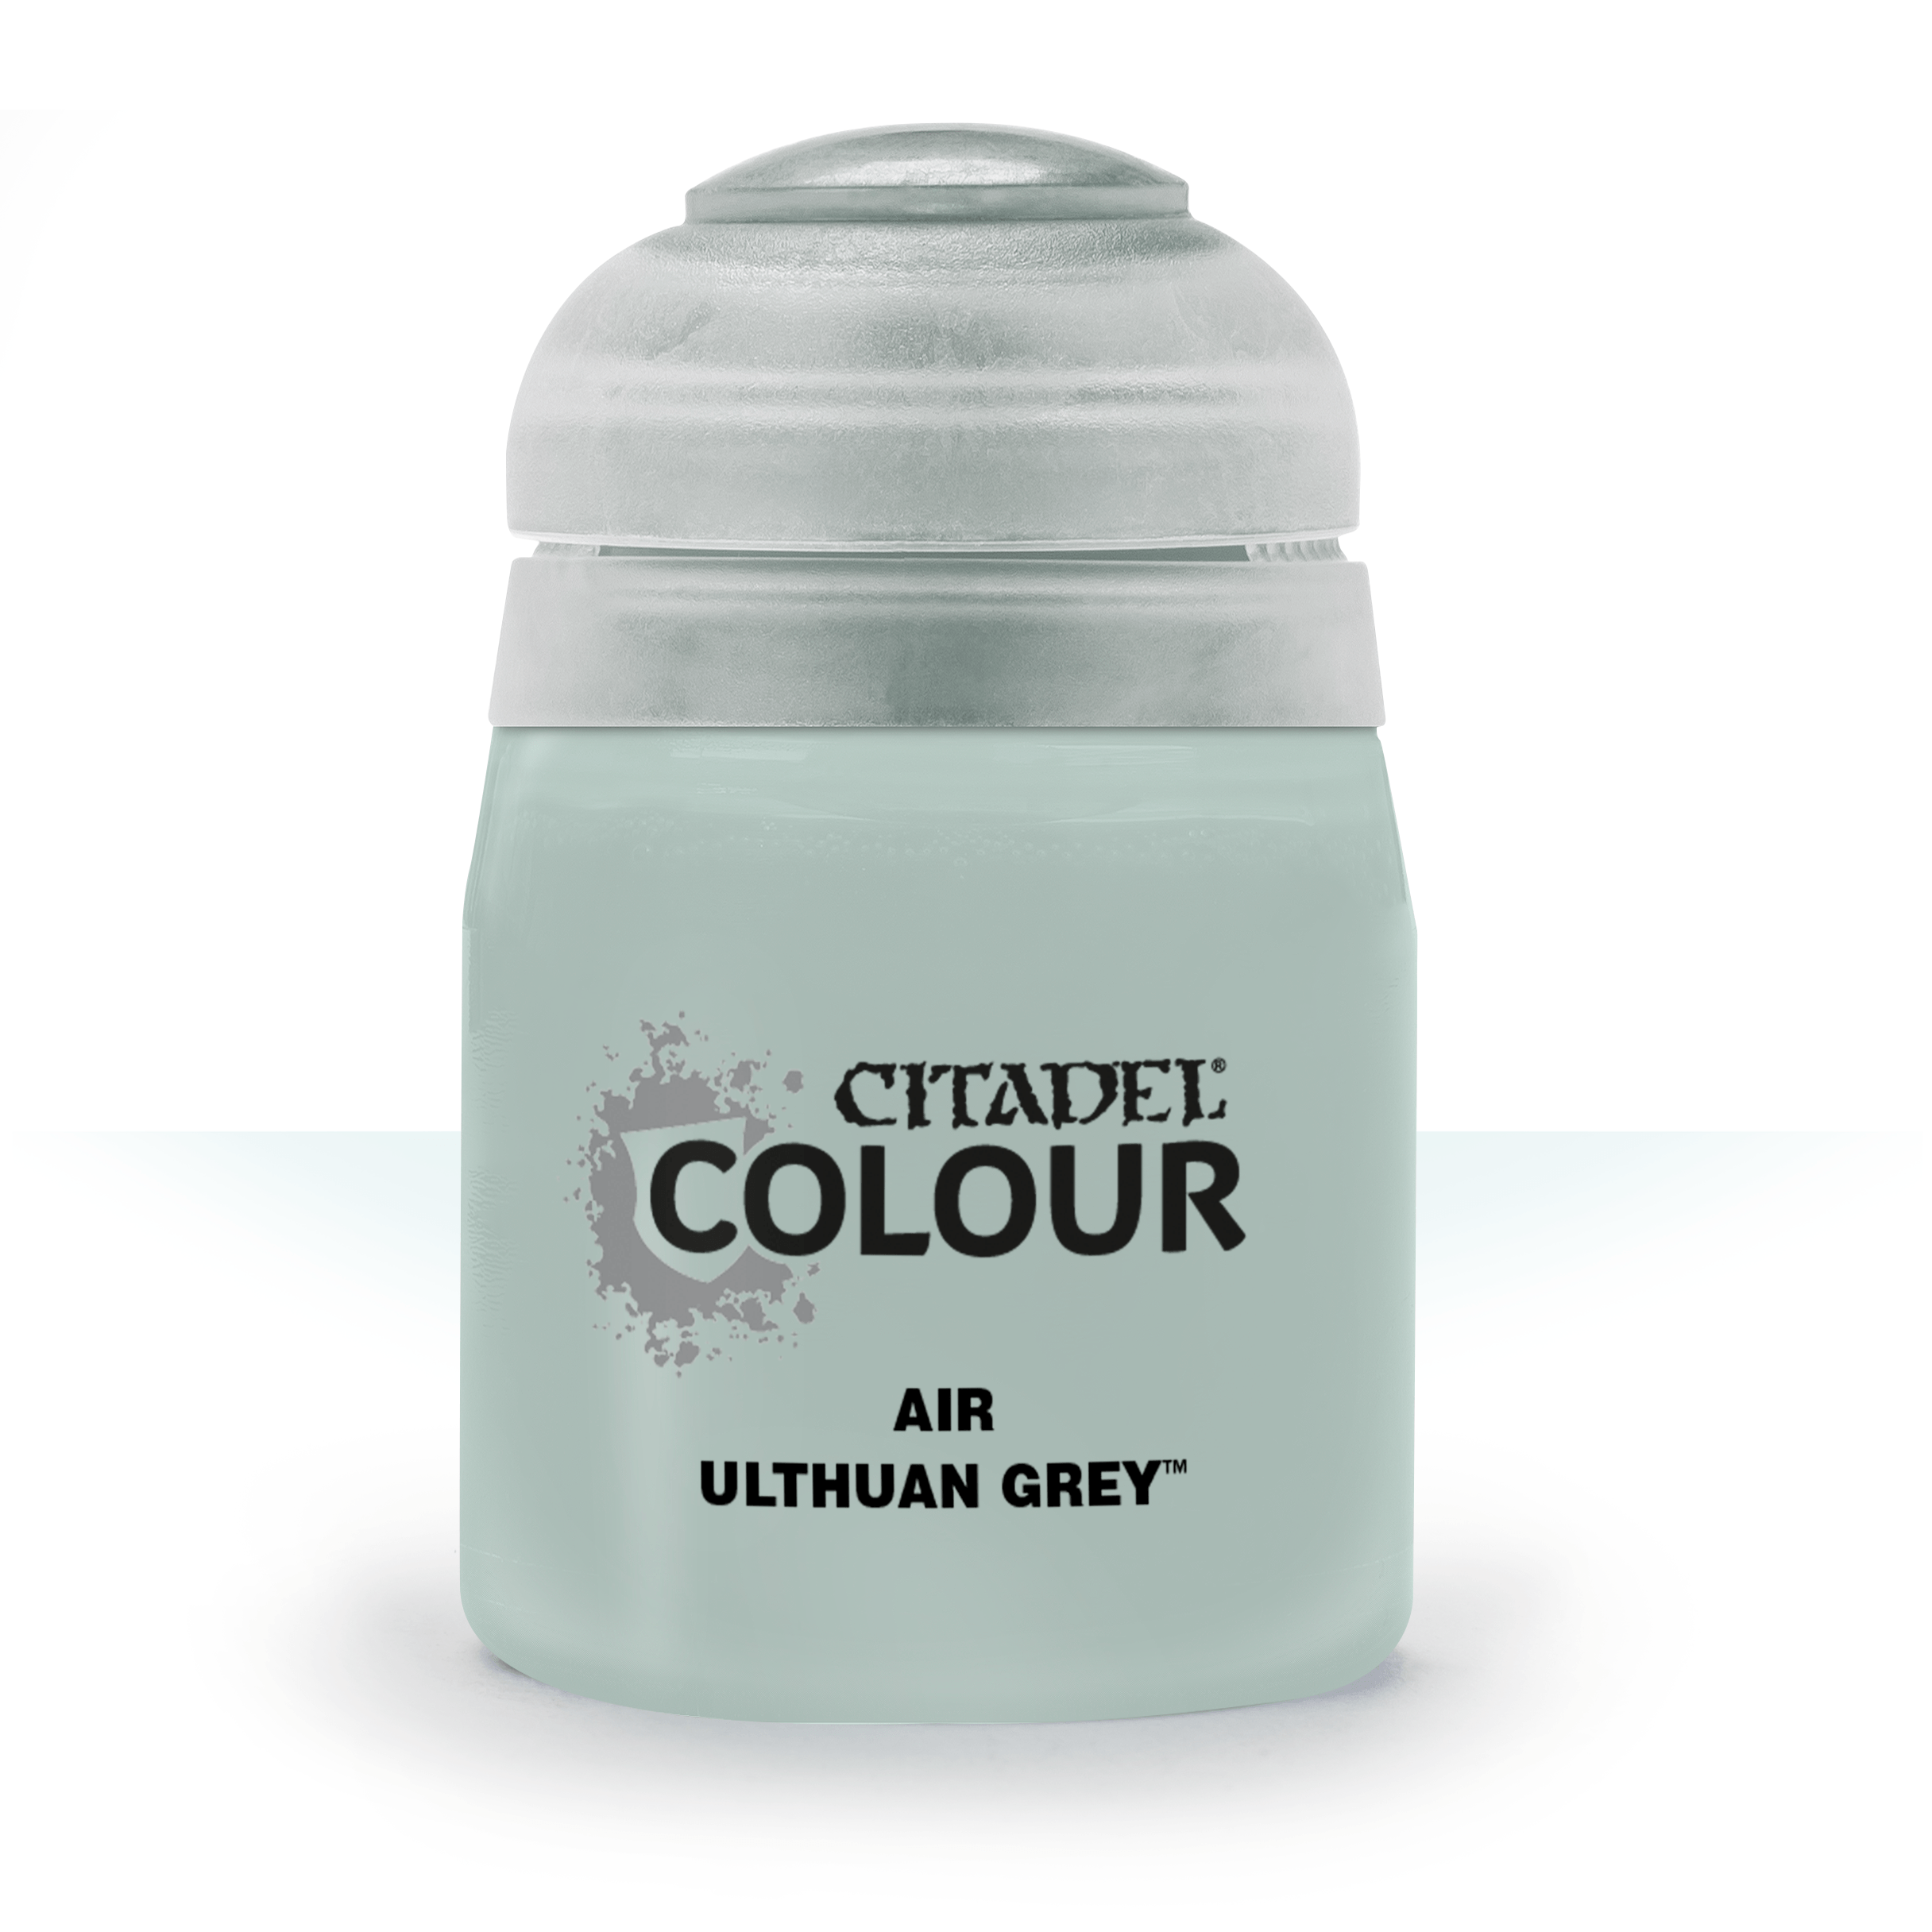 Air Ulthuan Grey - Citadel Colour - 24 ml